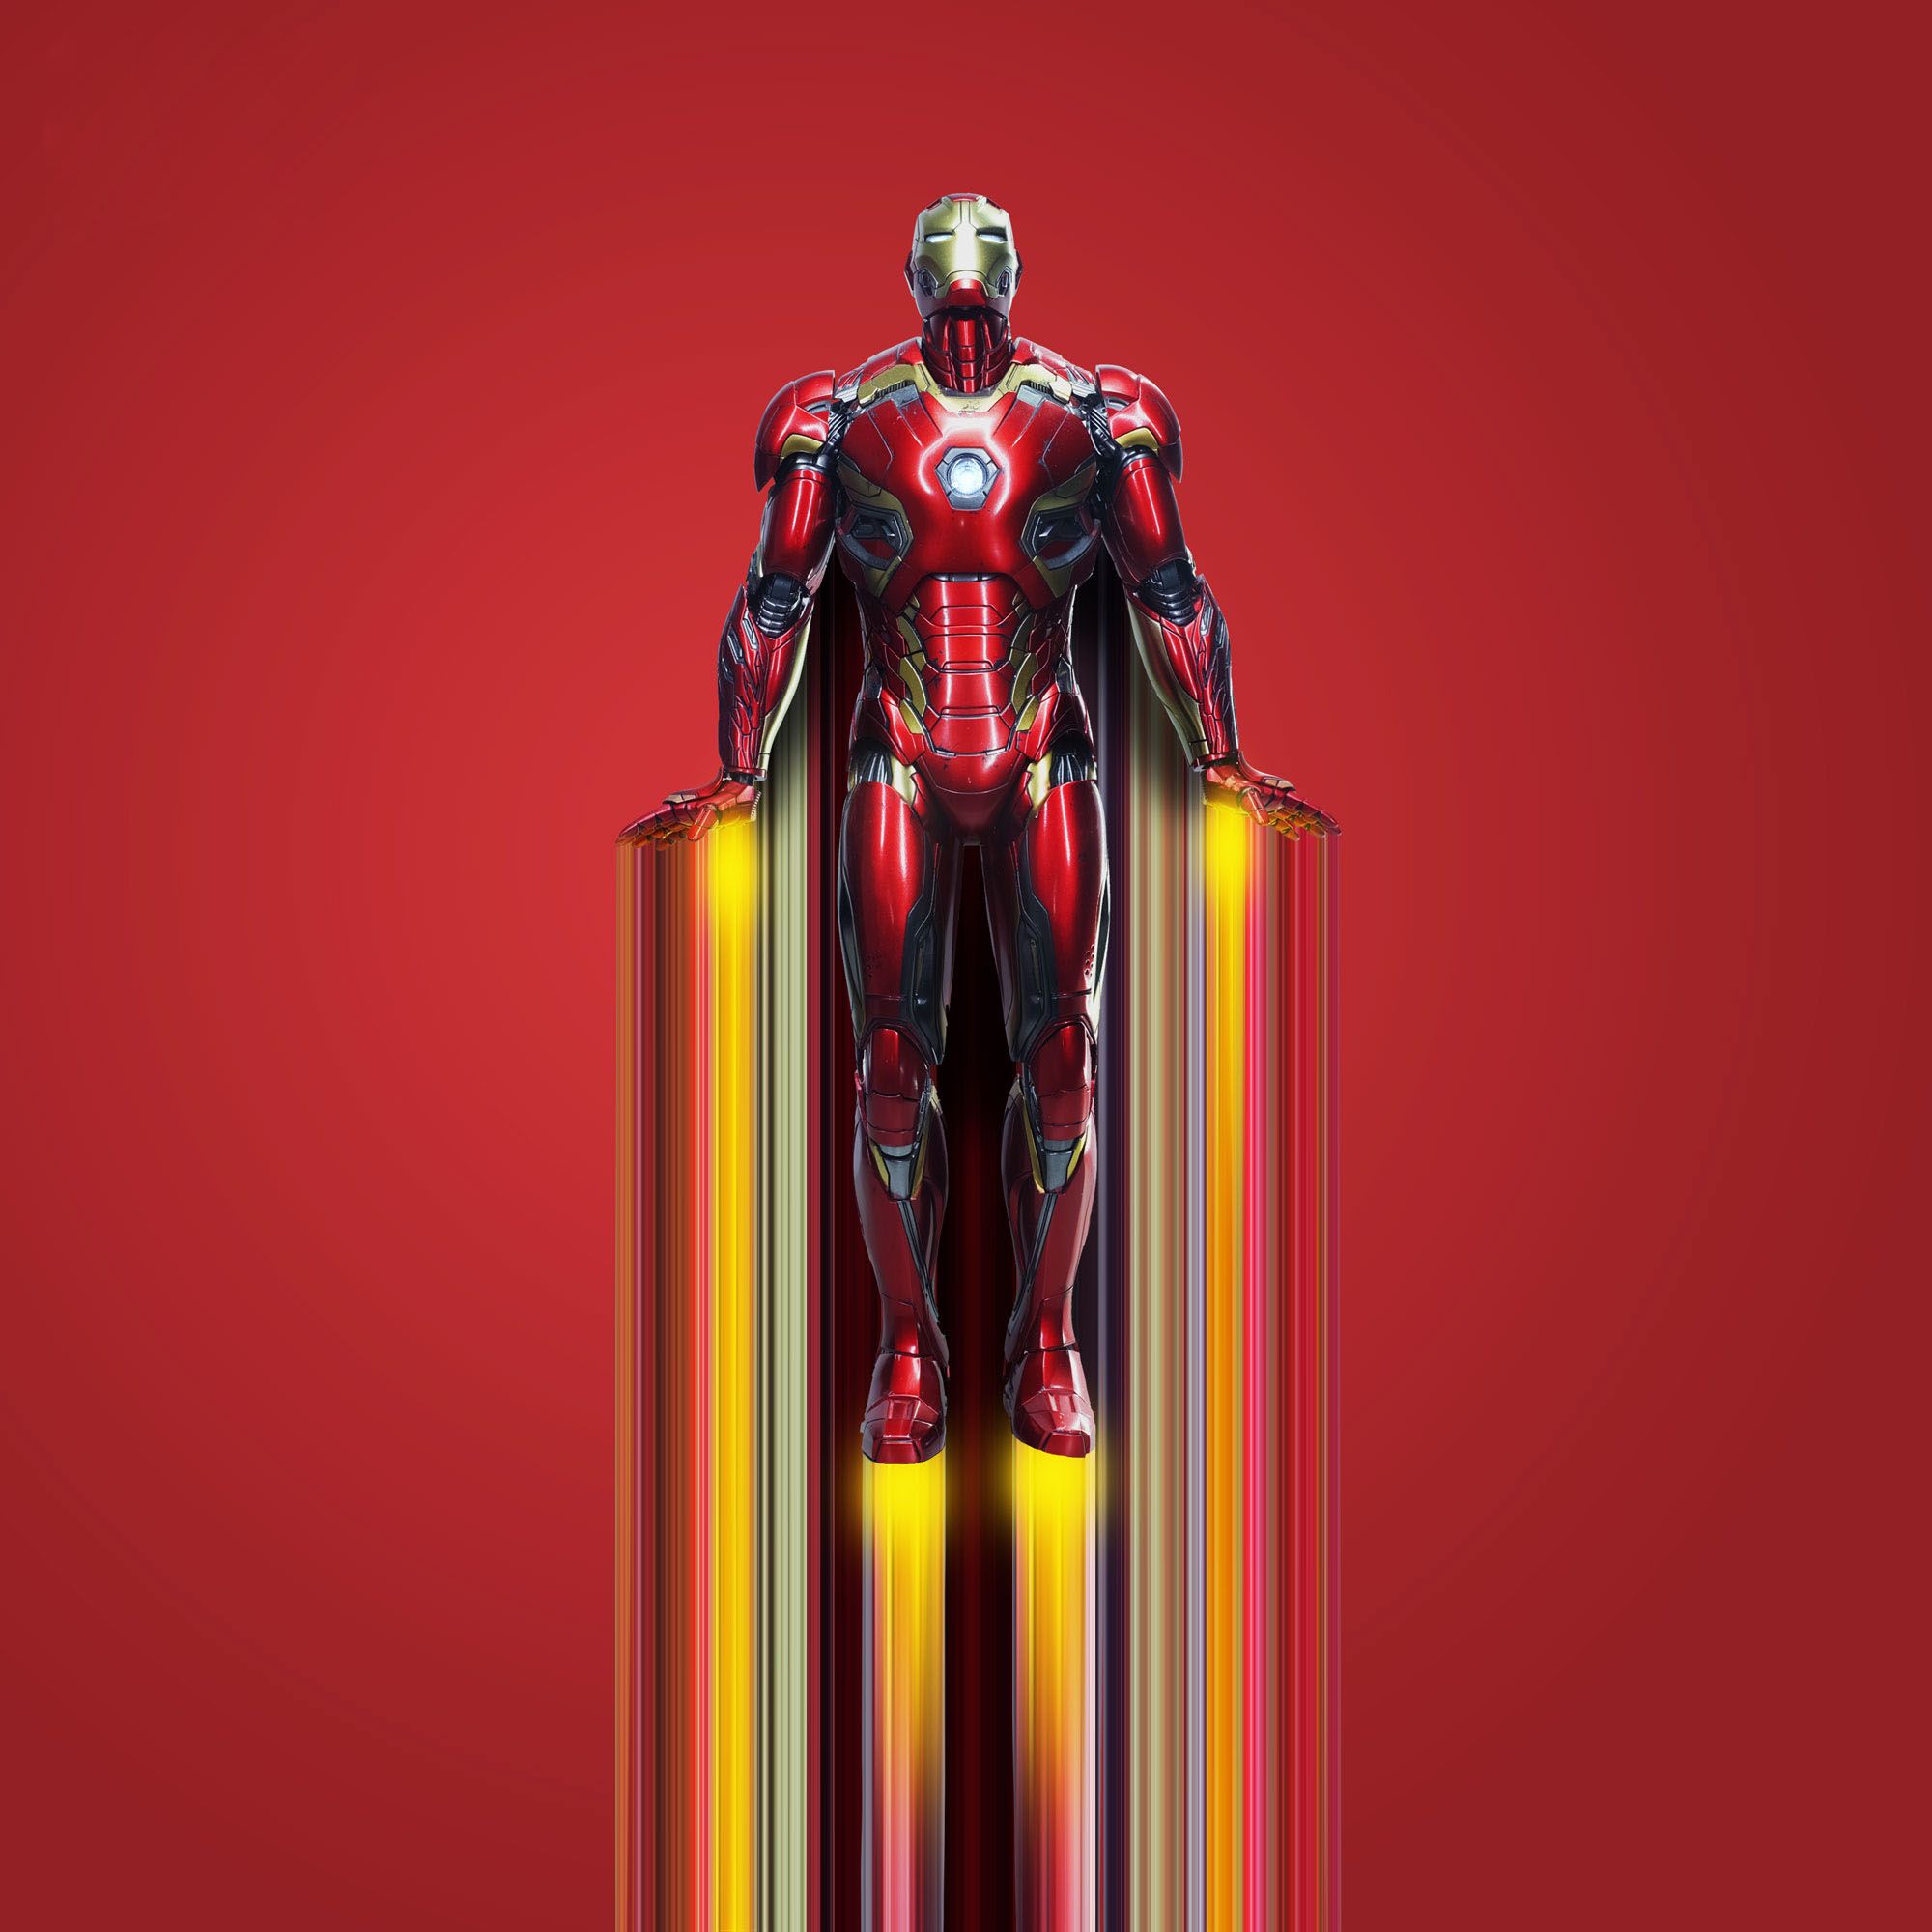 Iron Man Avengers Endgame Art iPhone XS MAX Wallpaper, HD Artist 4K Wallpaper, Image, Photo and Background